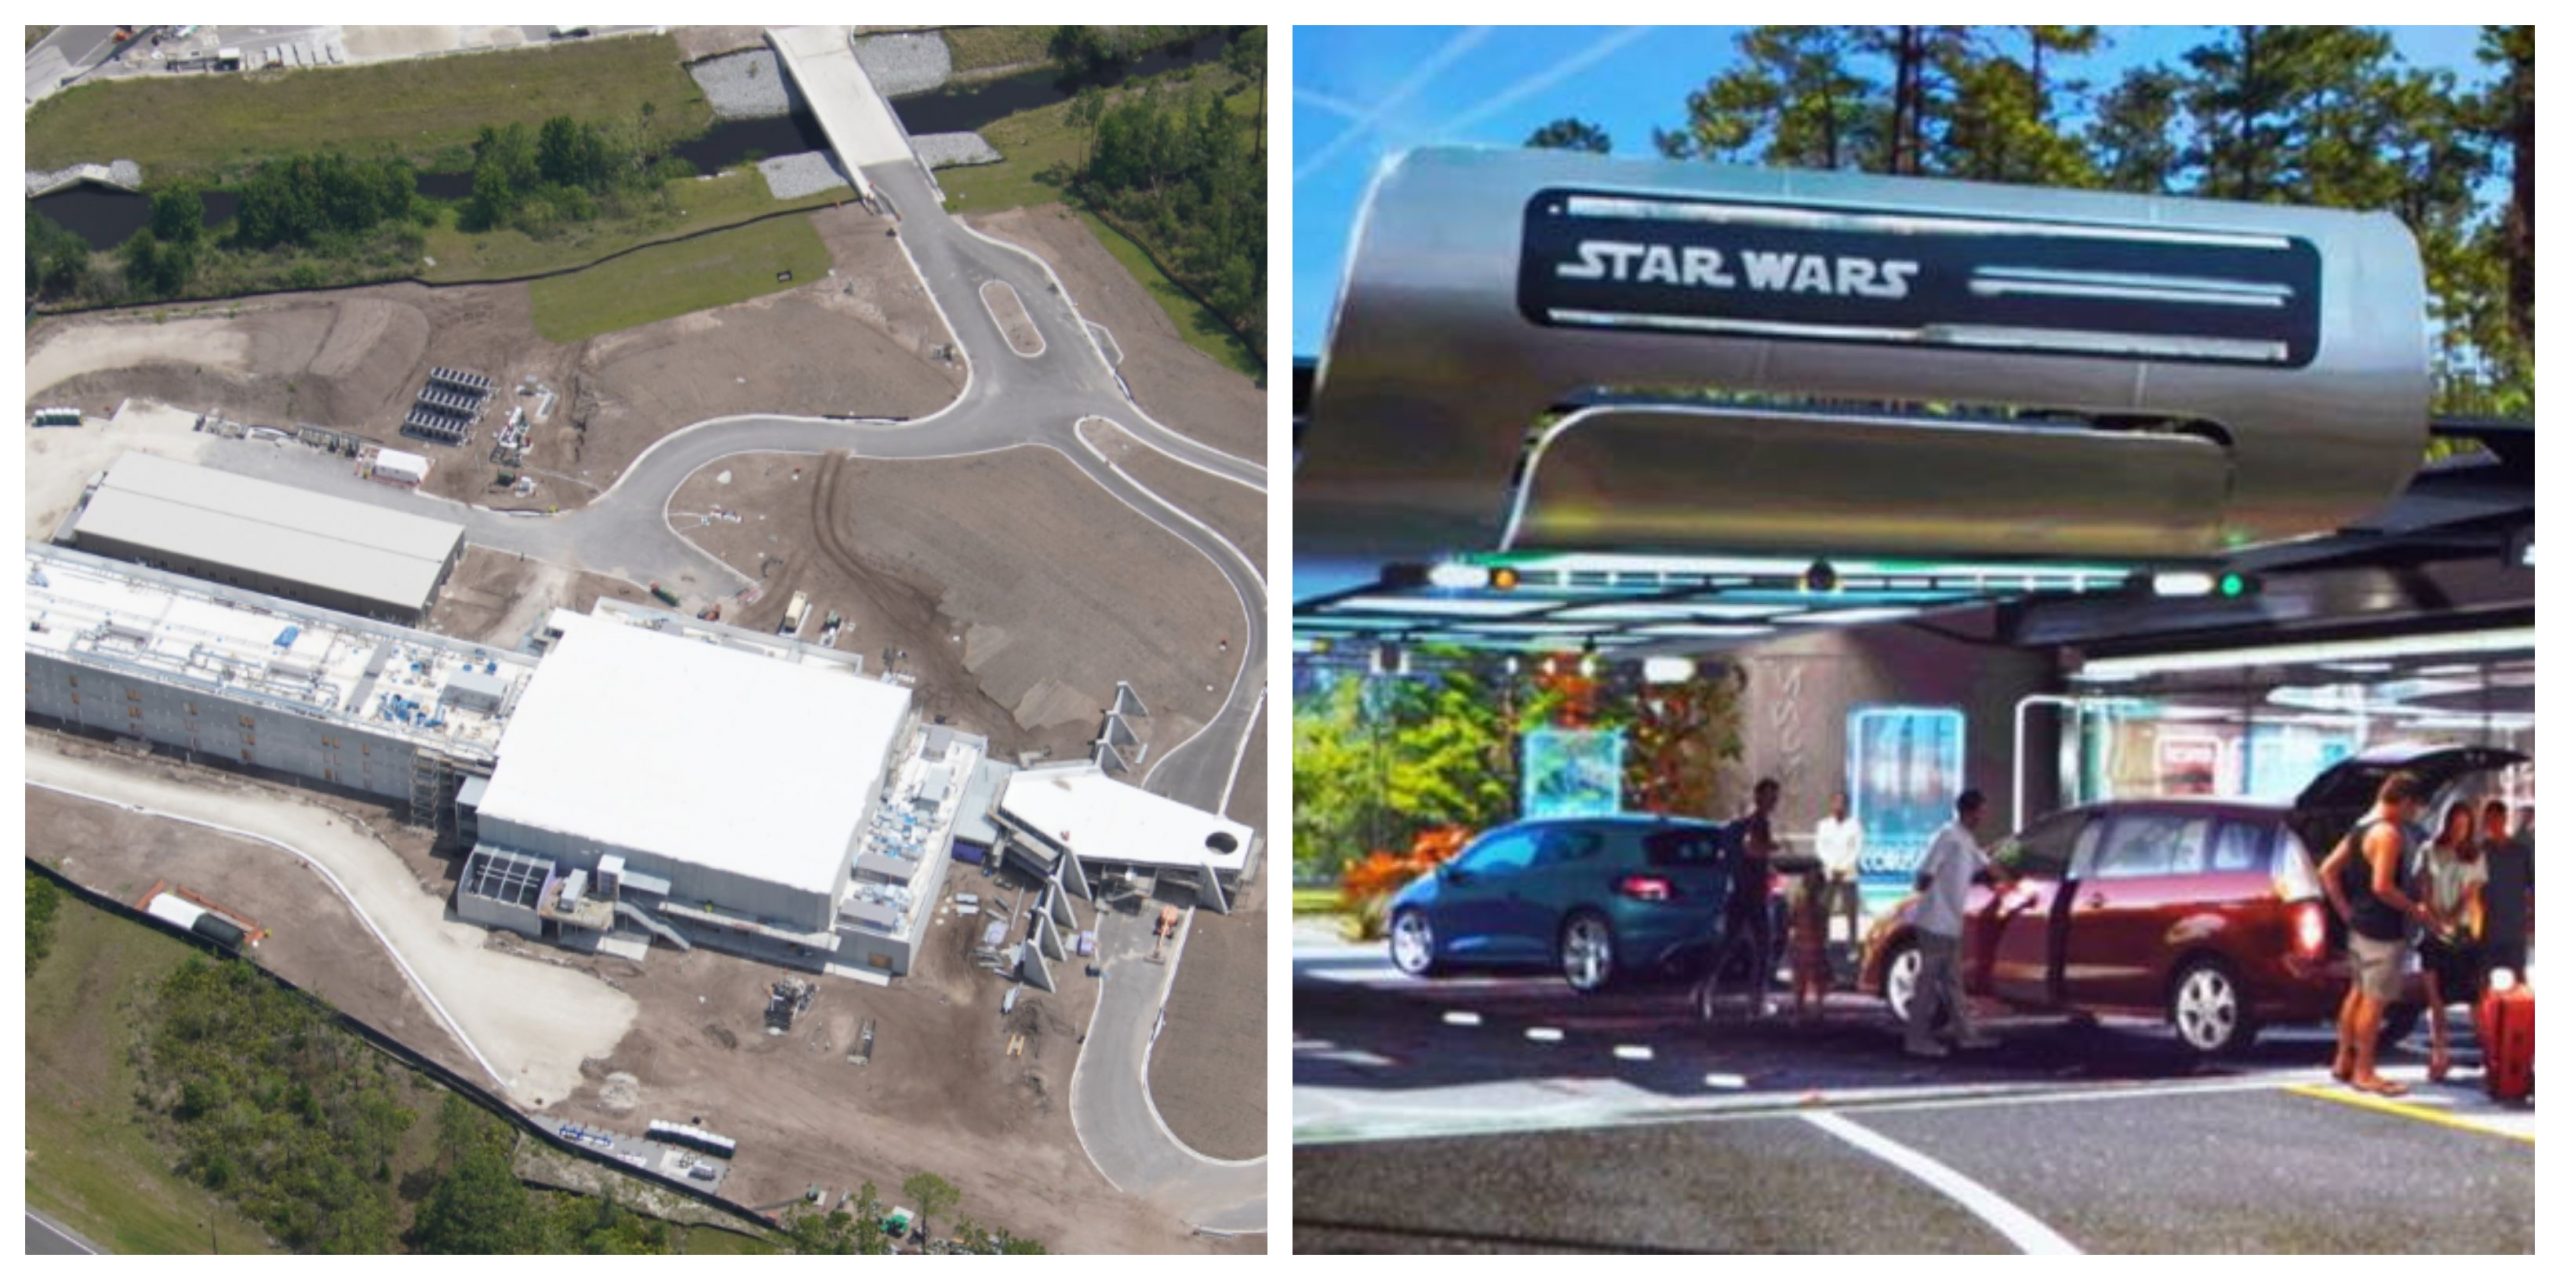 Aerial look at Star Wars Galactic Starcruiser hotel